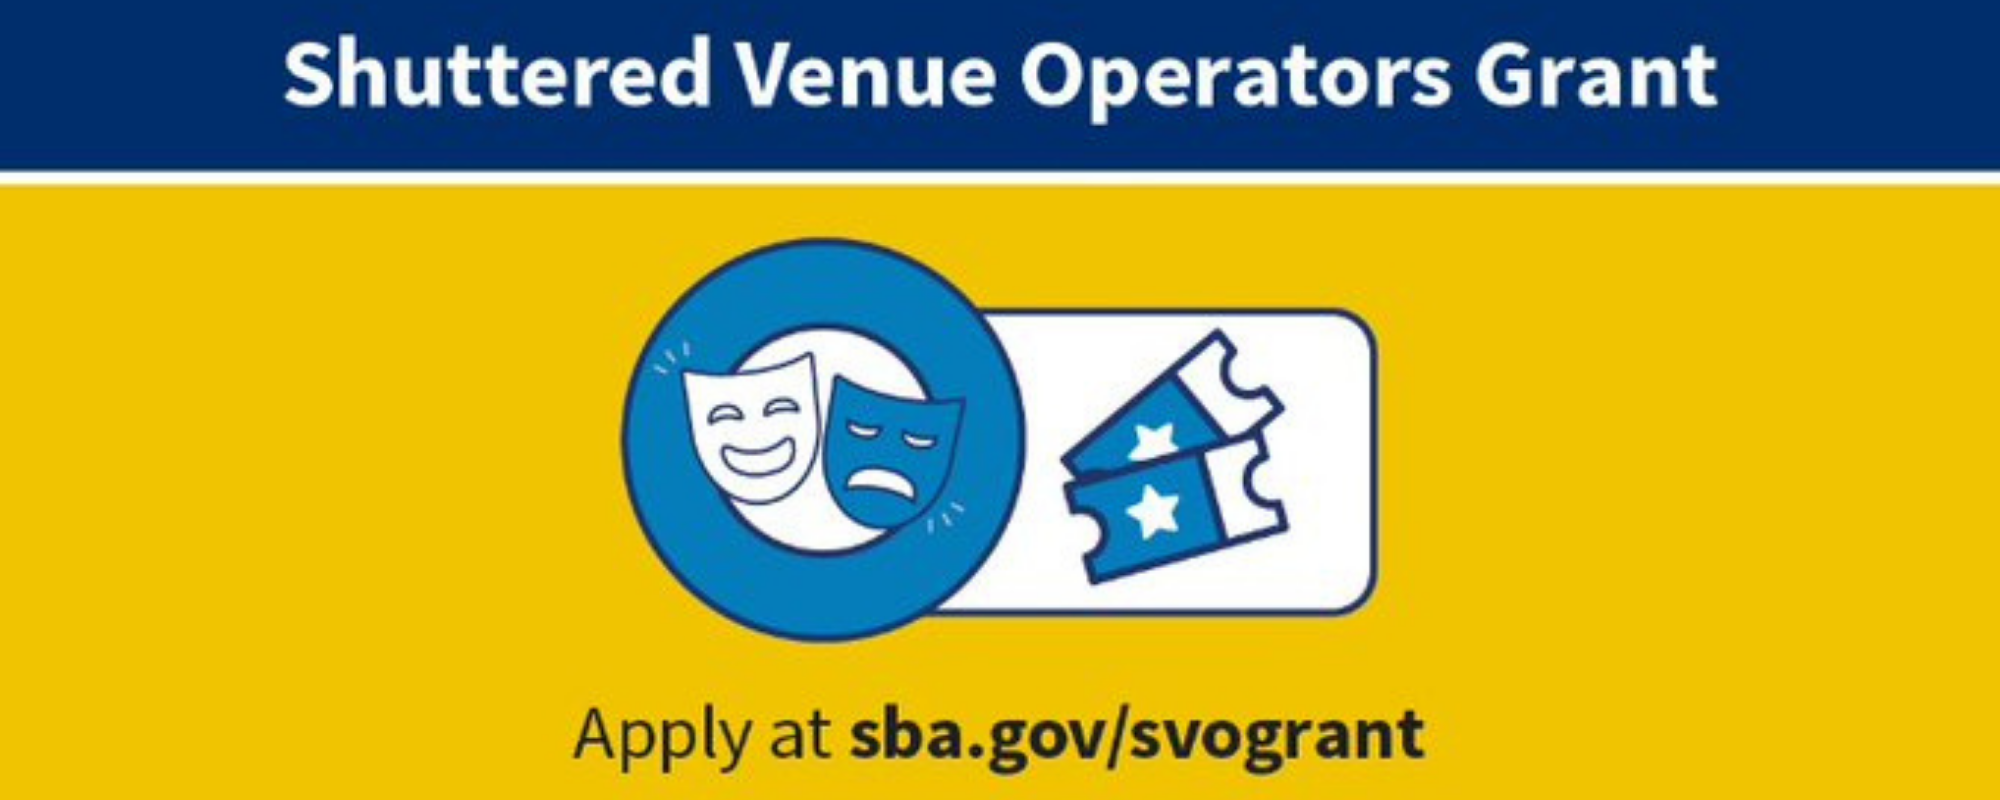 Delayed Shuttered Venue Operators Grant (SVOG) Applications Portal Finally Reopens